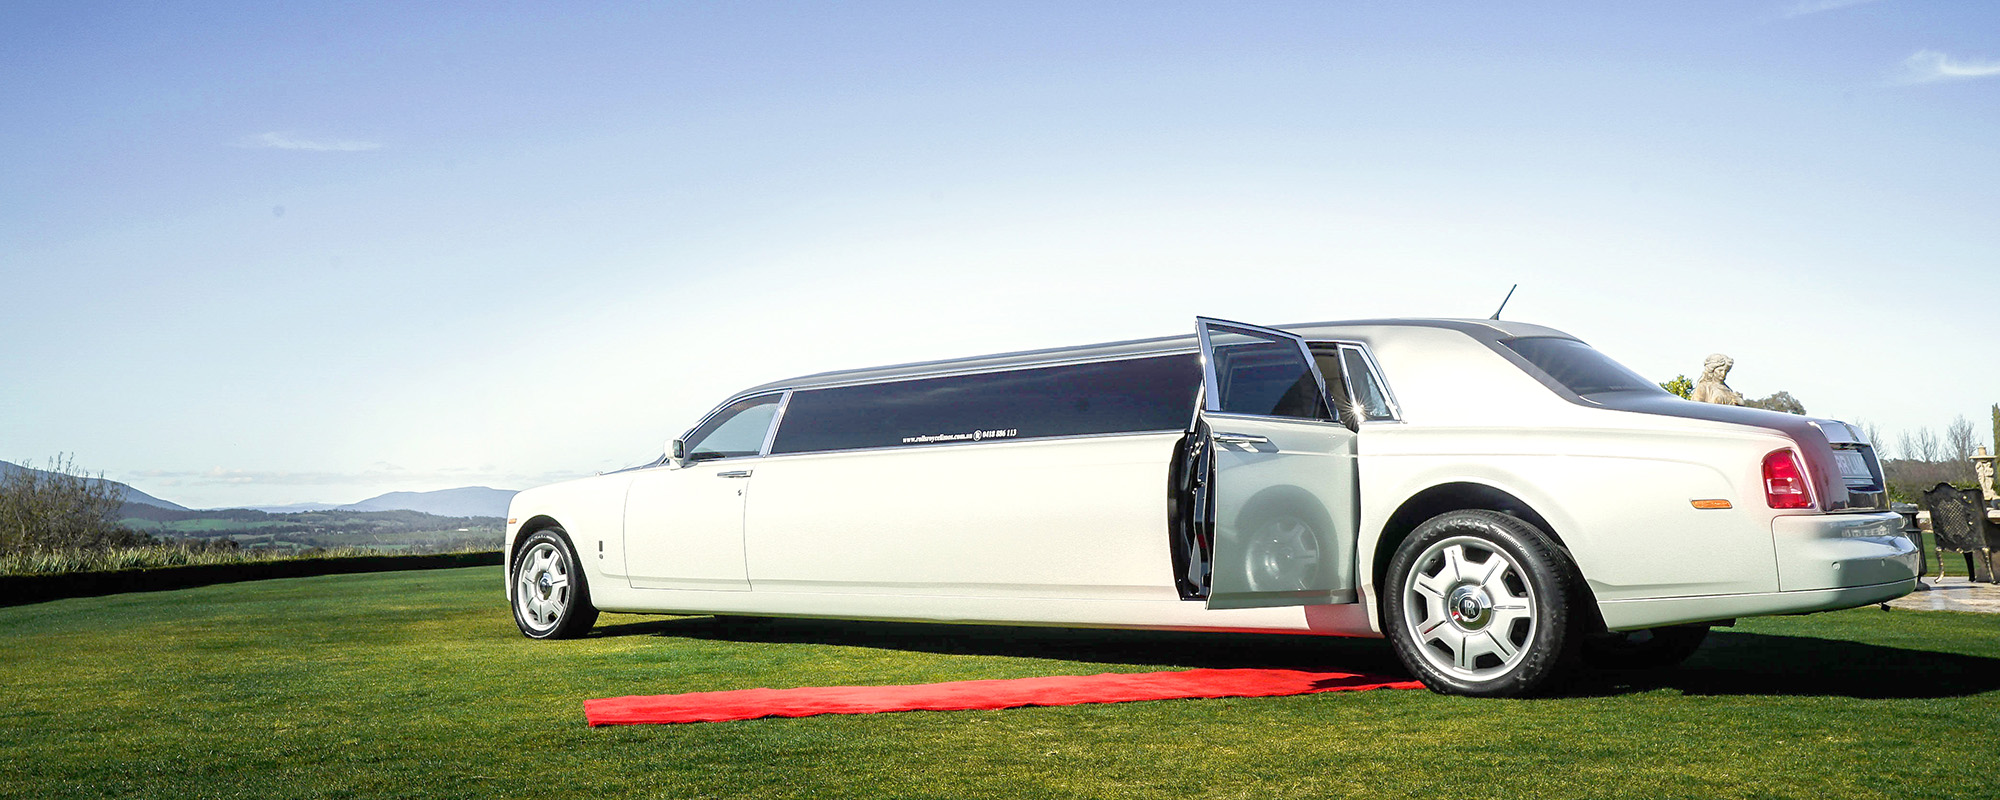 White limo hire - White Rolls-Royce Phantom Limousine Melbourne - Red Carpet limo for weddings